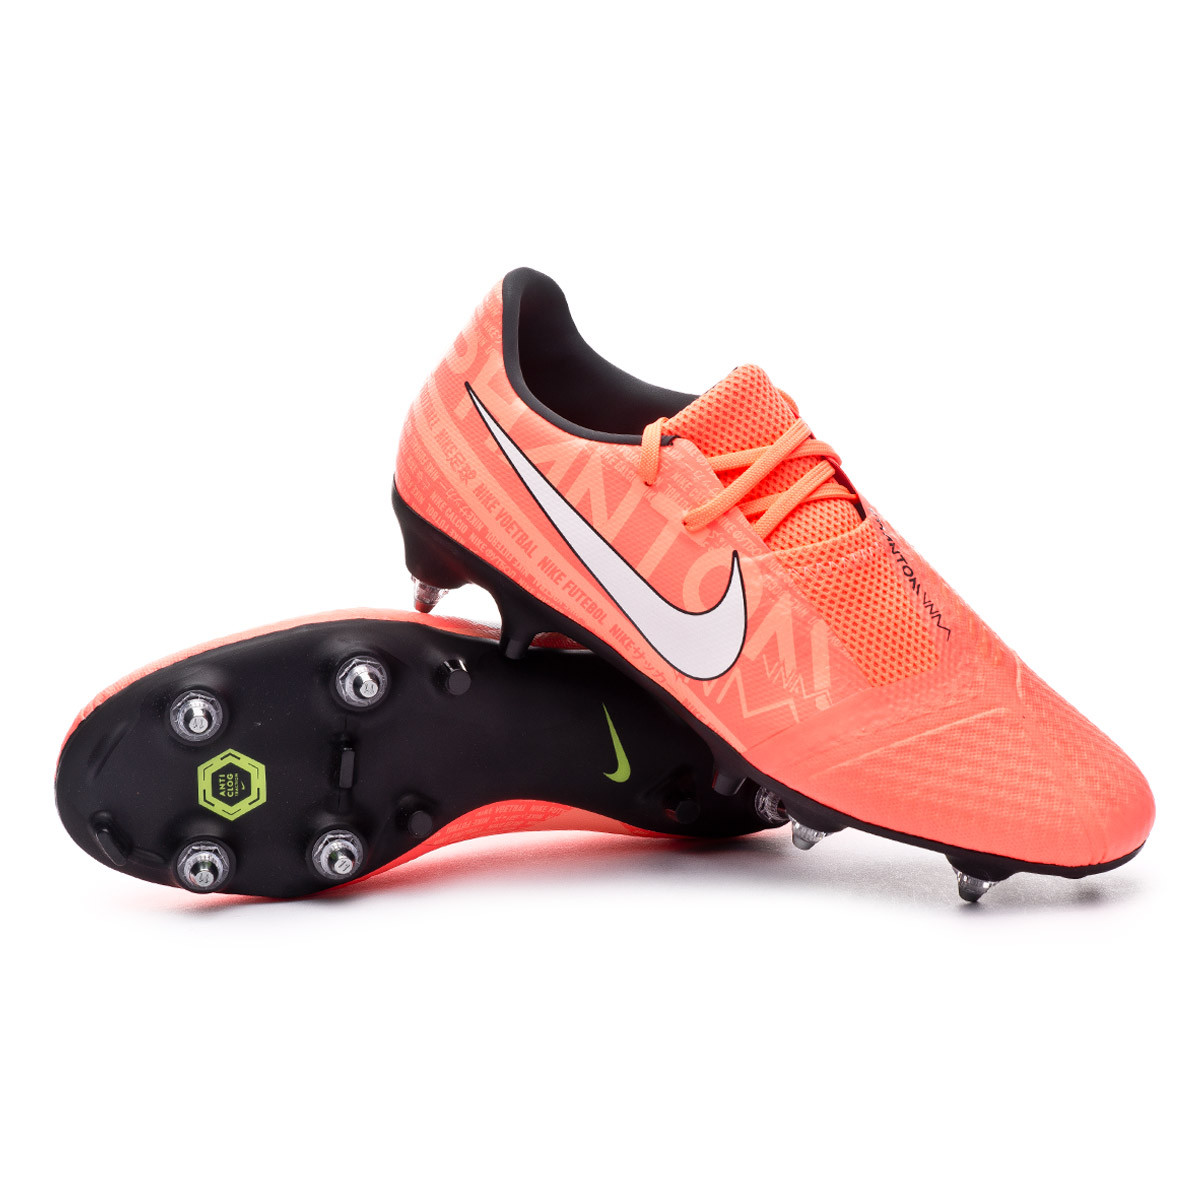 Hypervenom PhantomX Pro Nike futsal boots Football store .